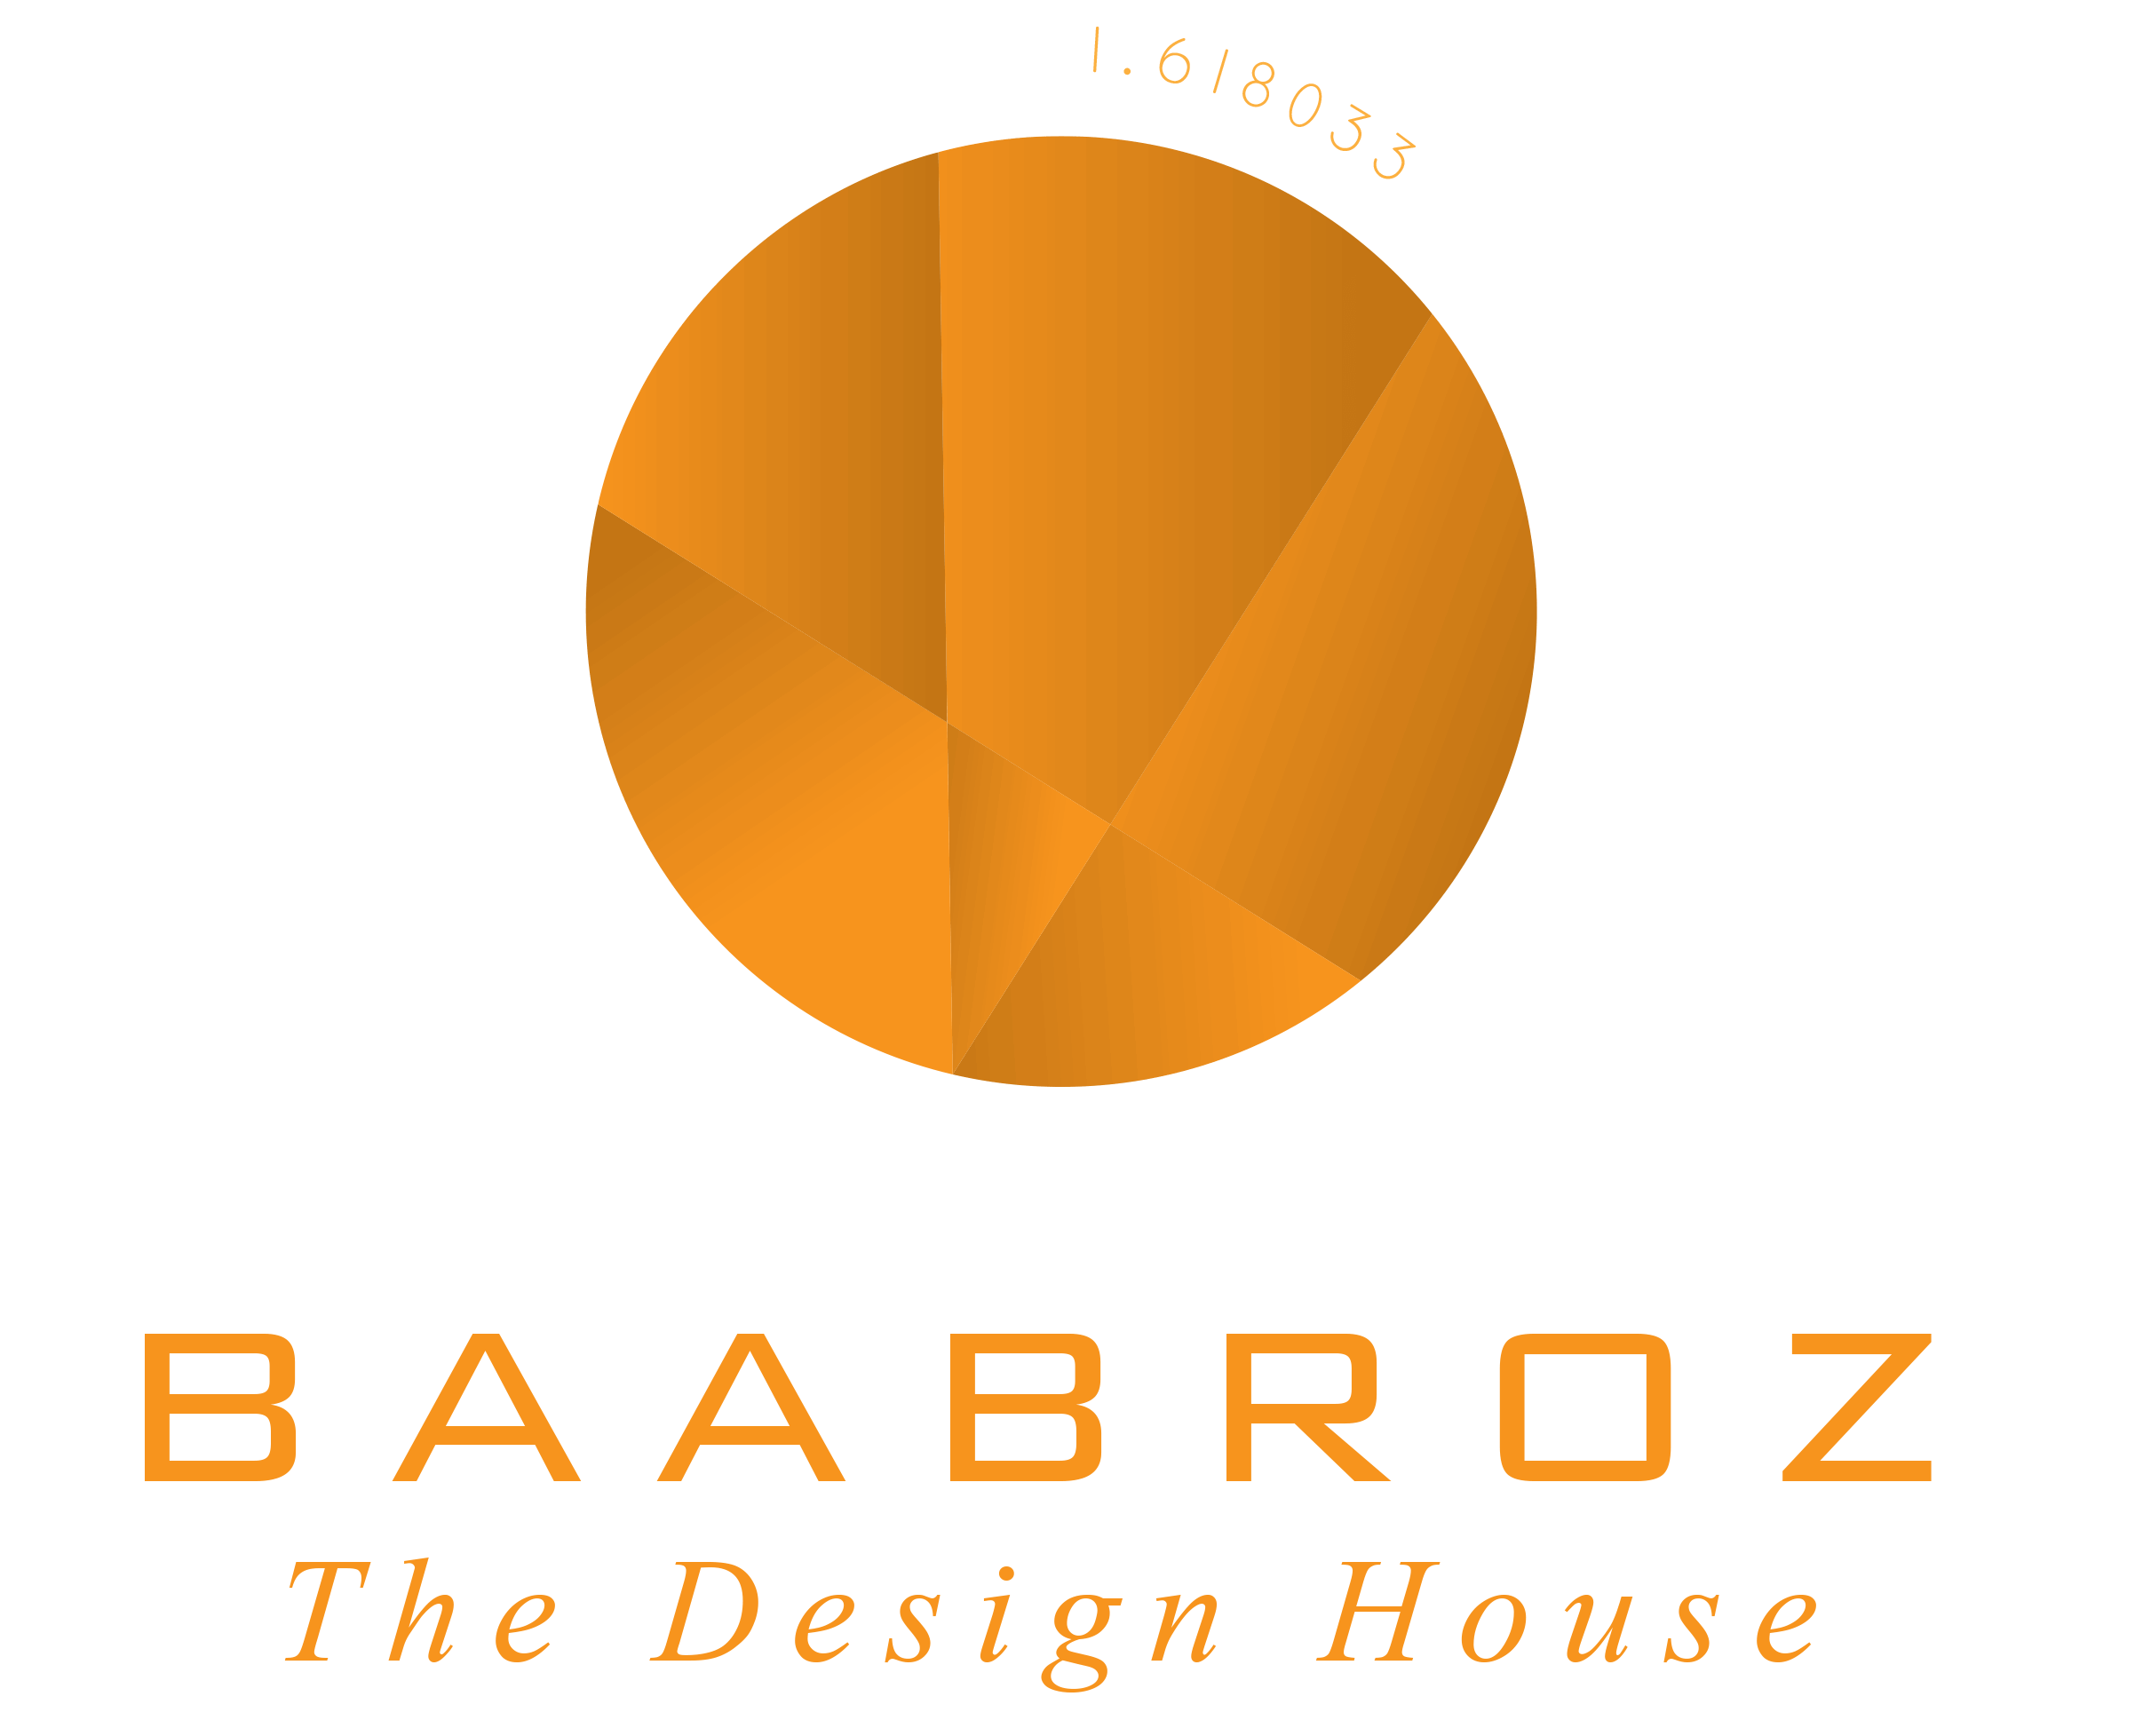 Baabroz design house